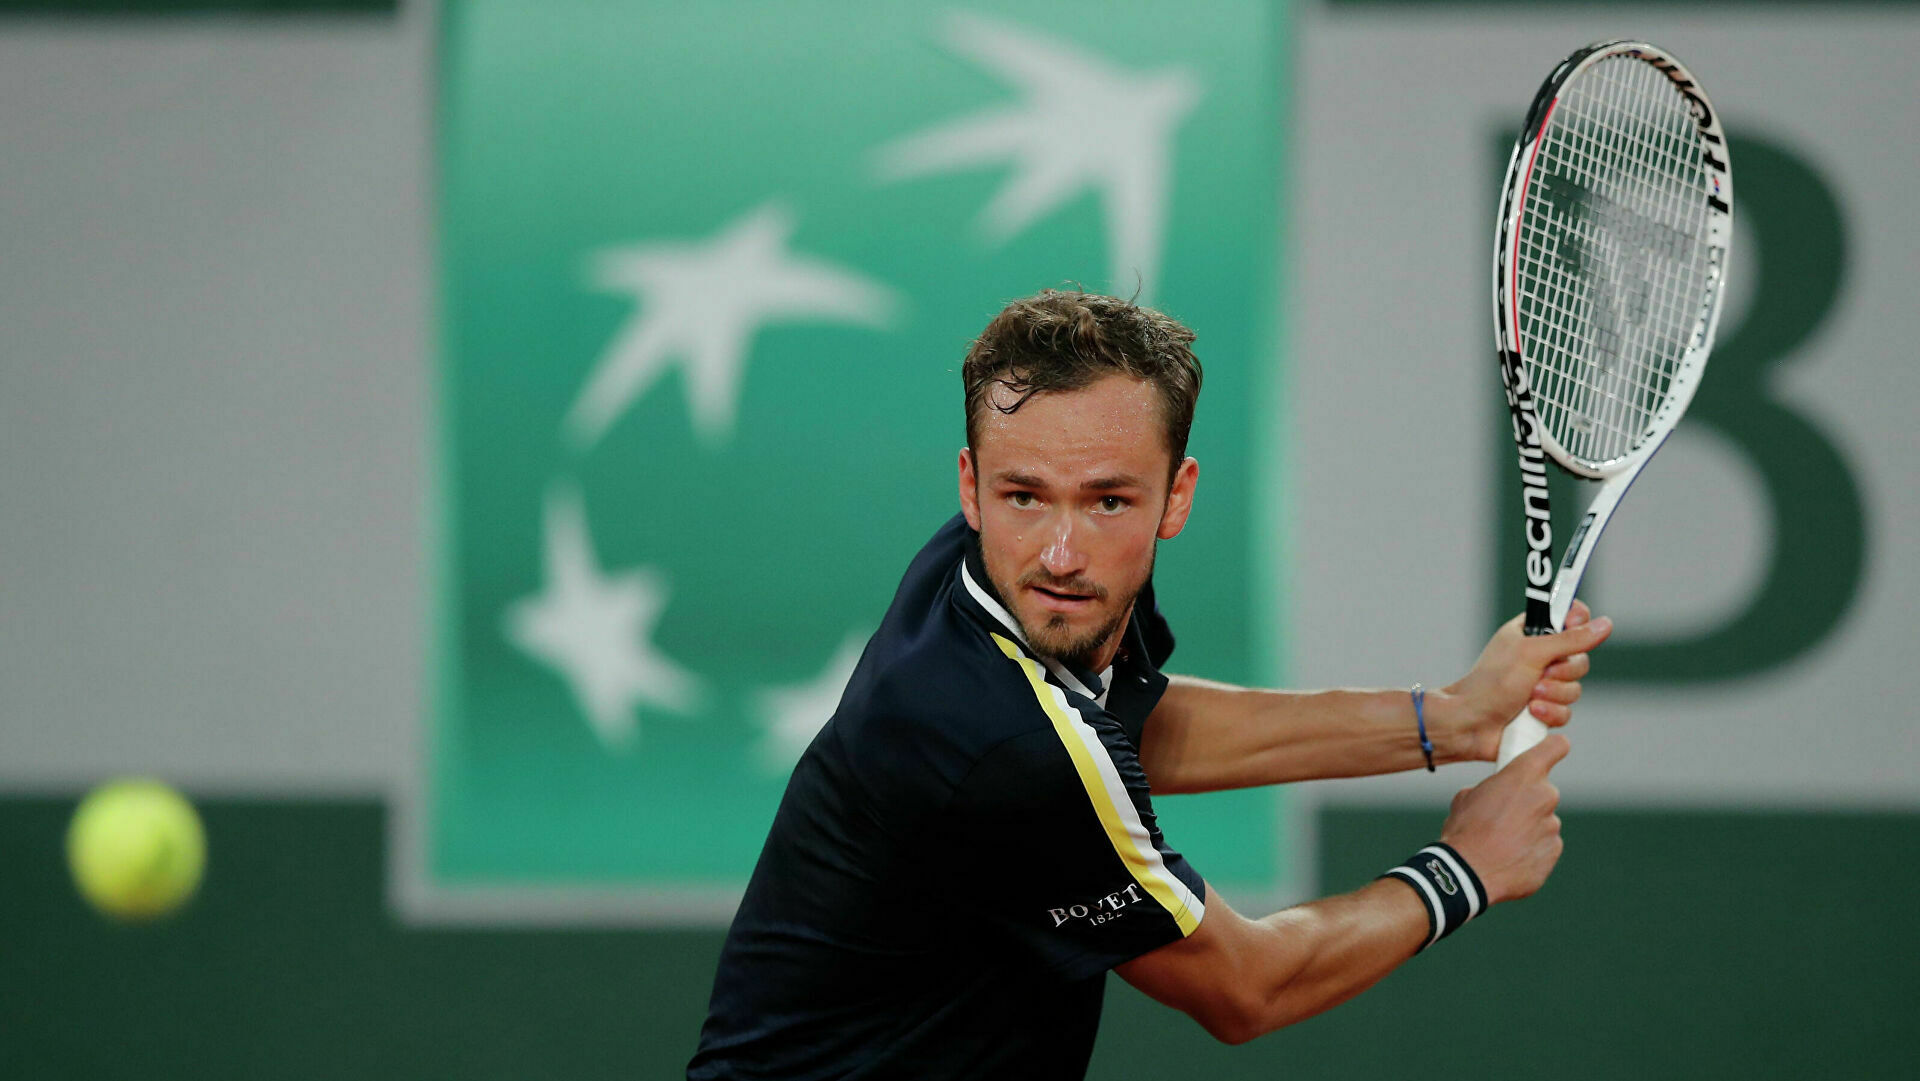 Daniil Medvedev qualifies for the first round of Roland Garros